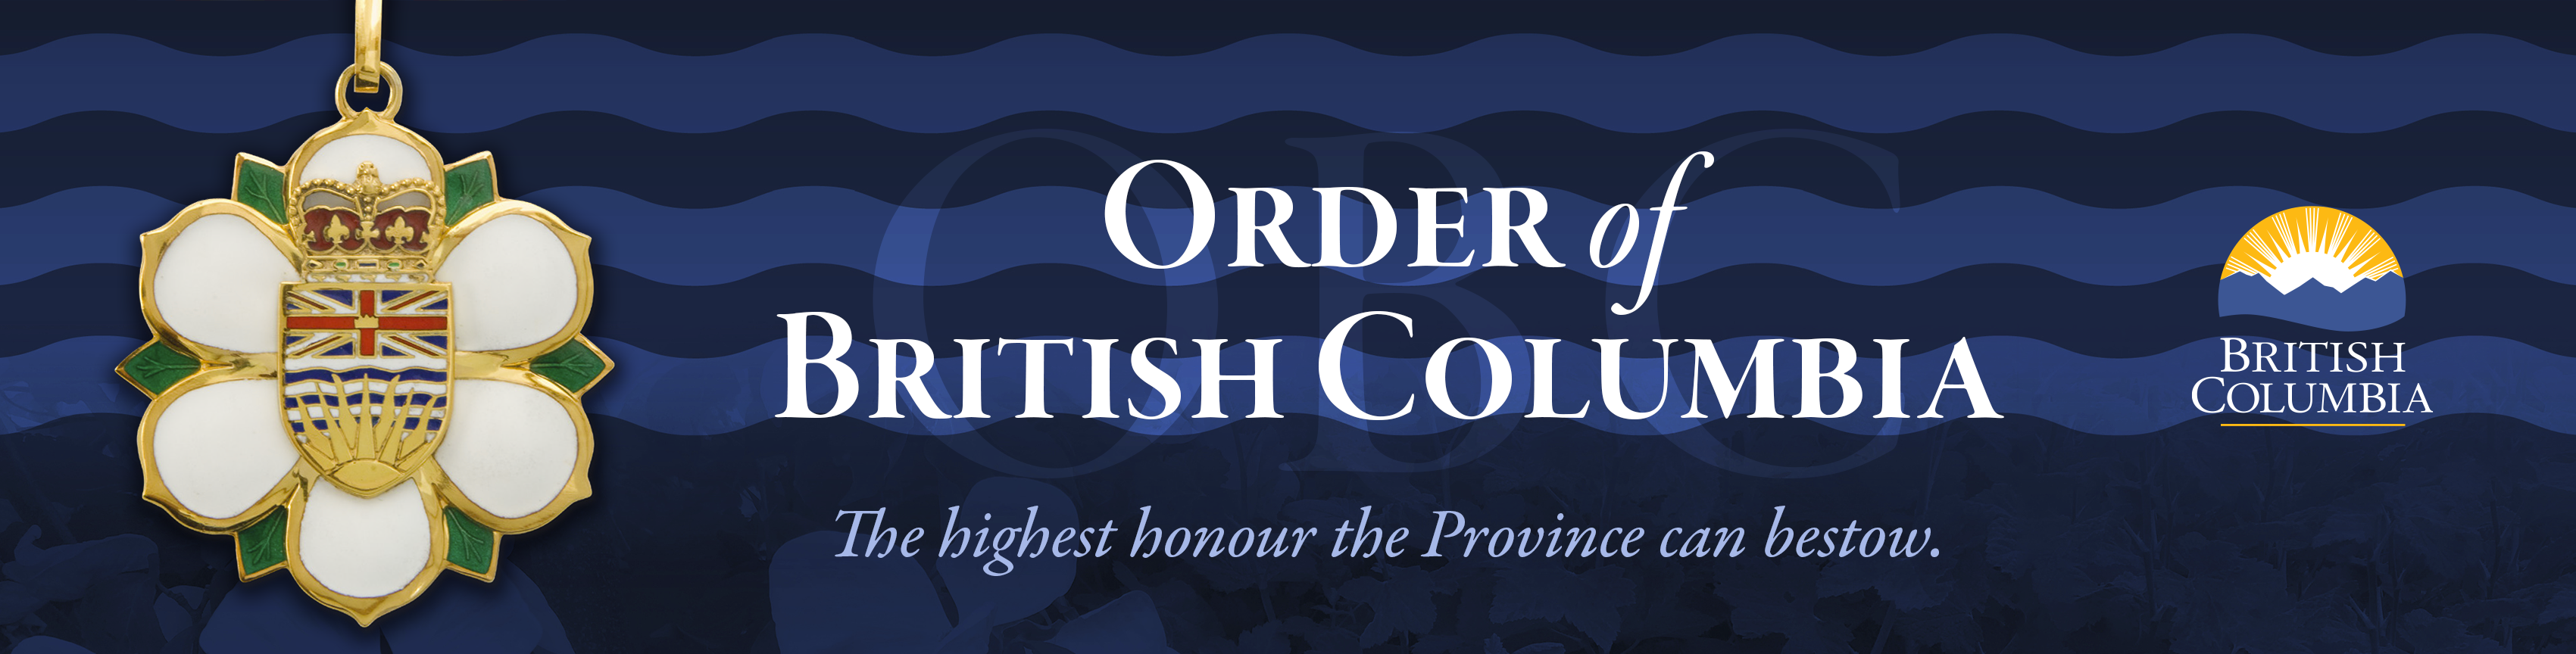 Order of British Columbia